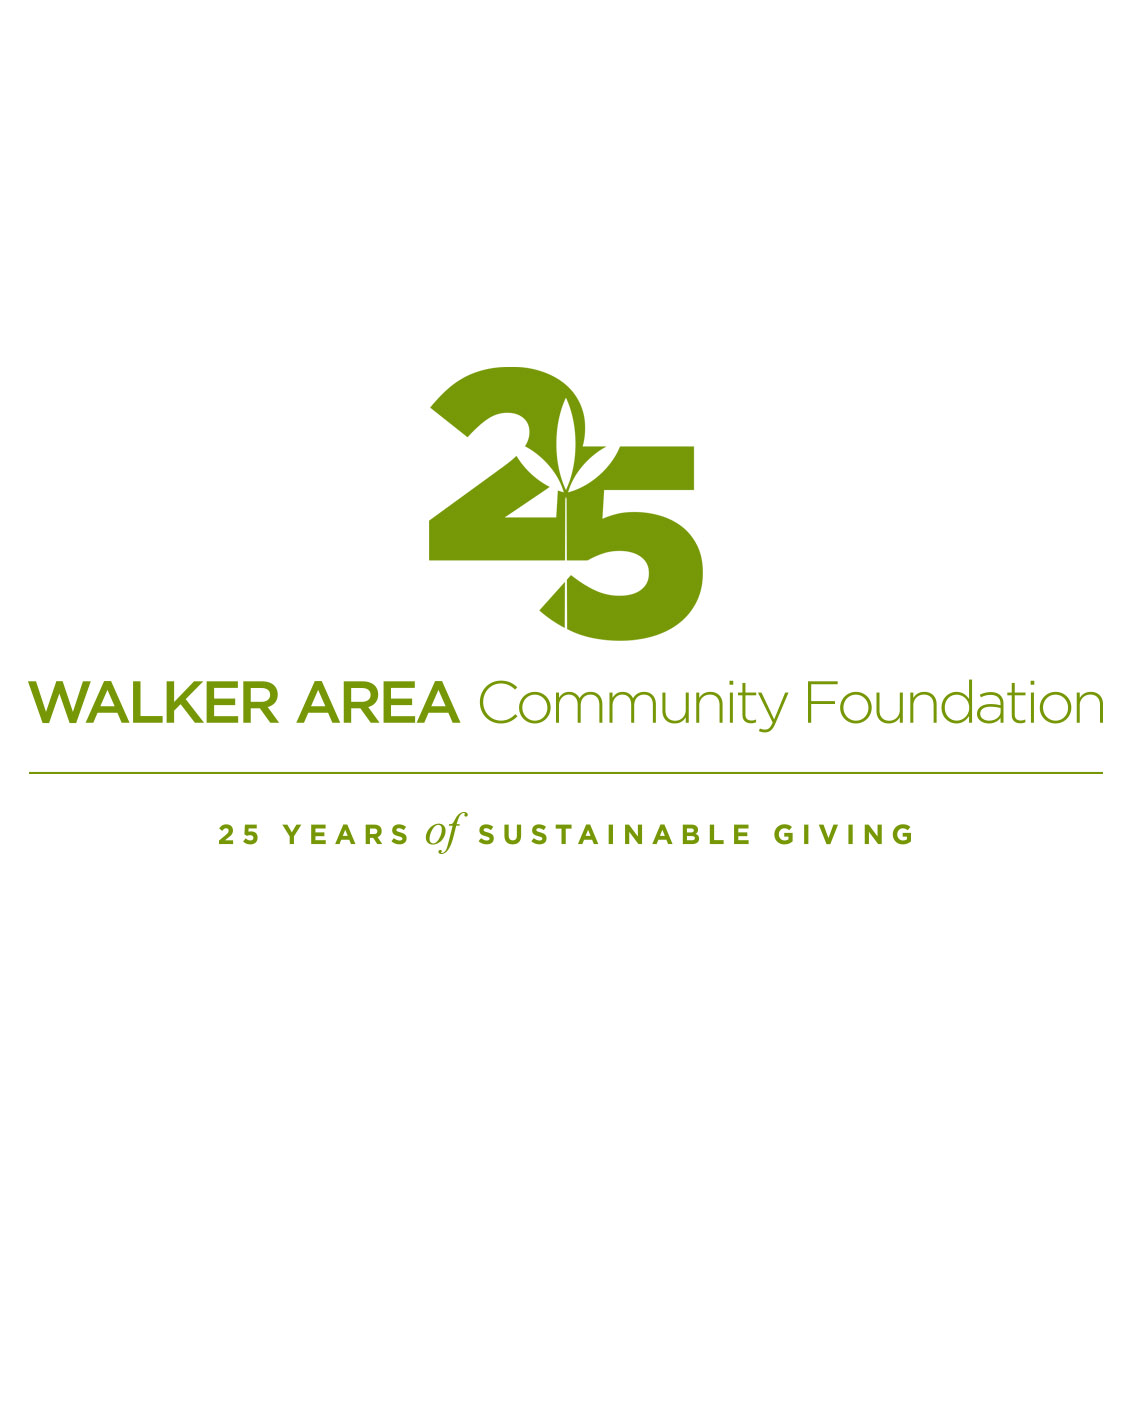 JWalker Area Community Foundation green and white logo